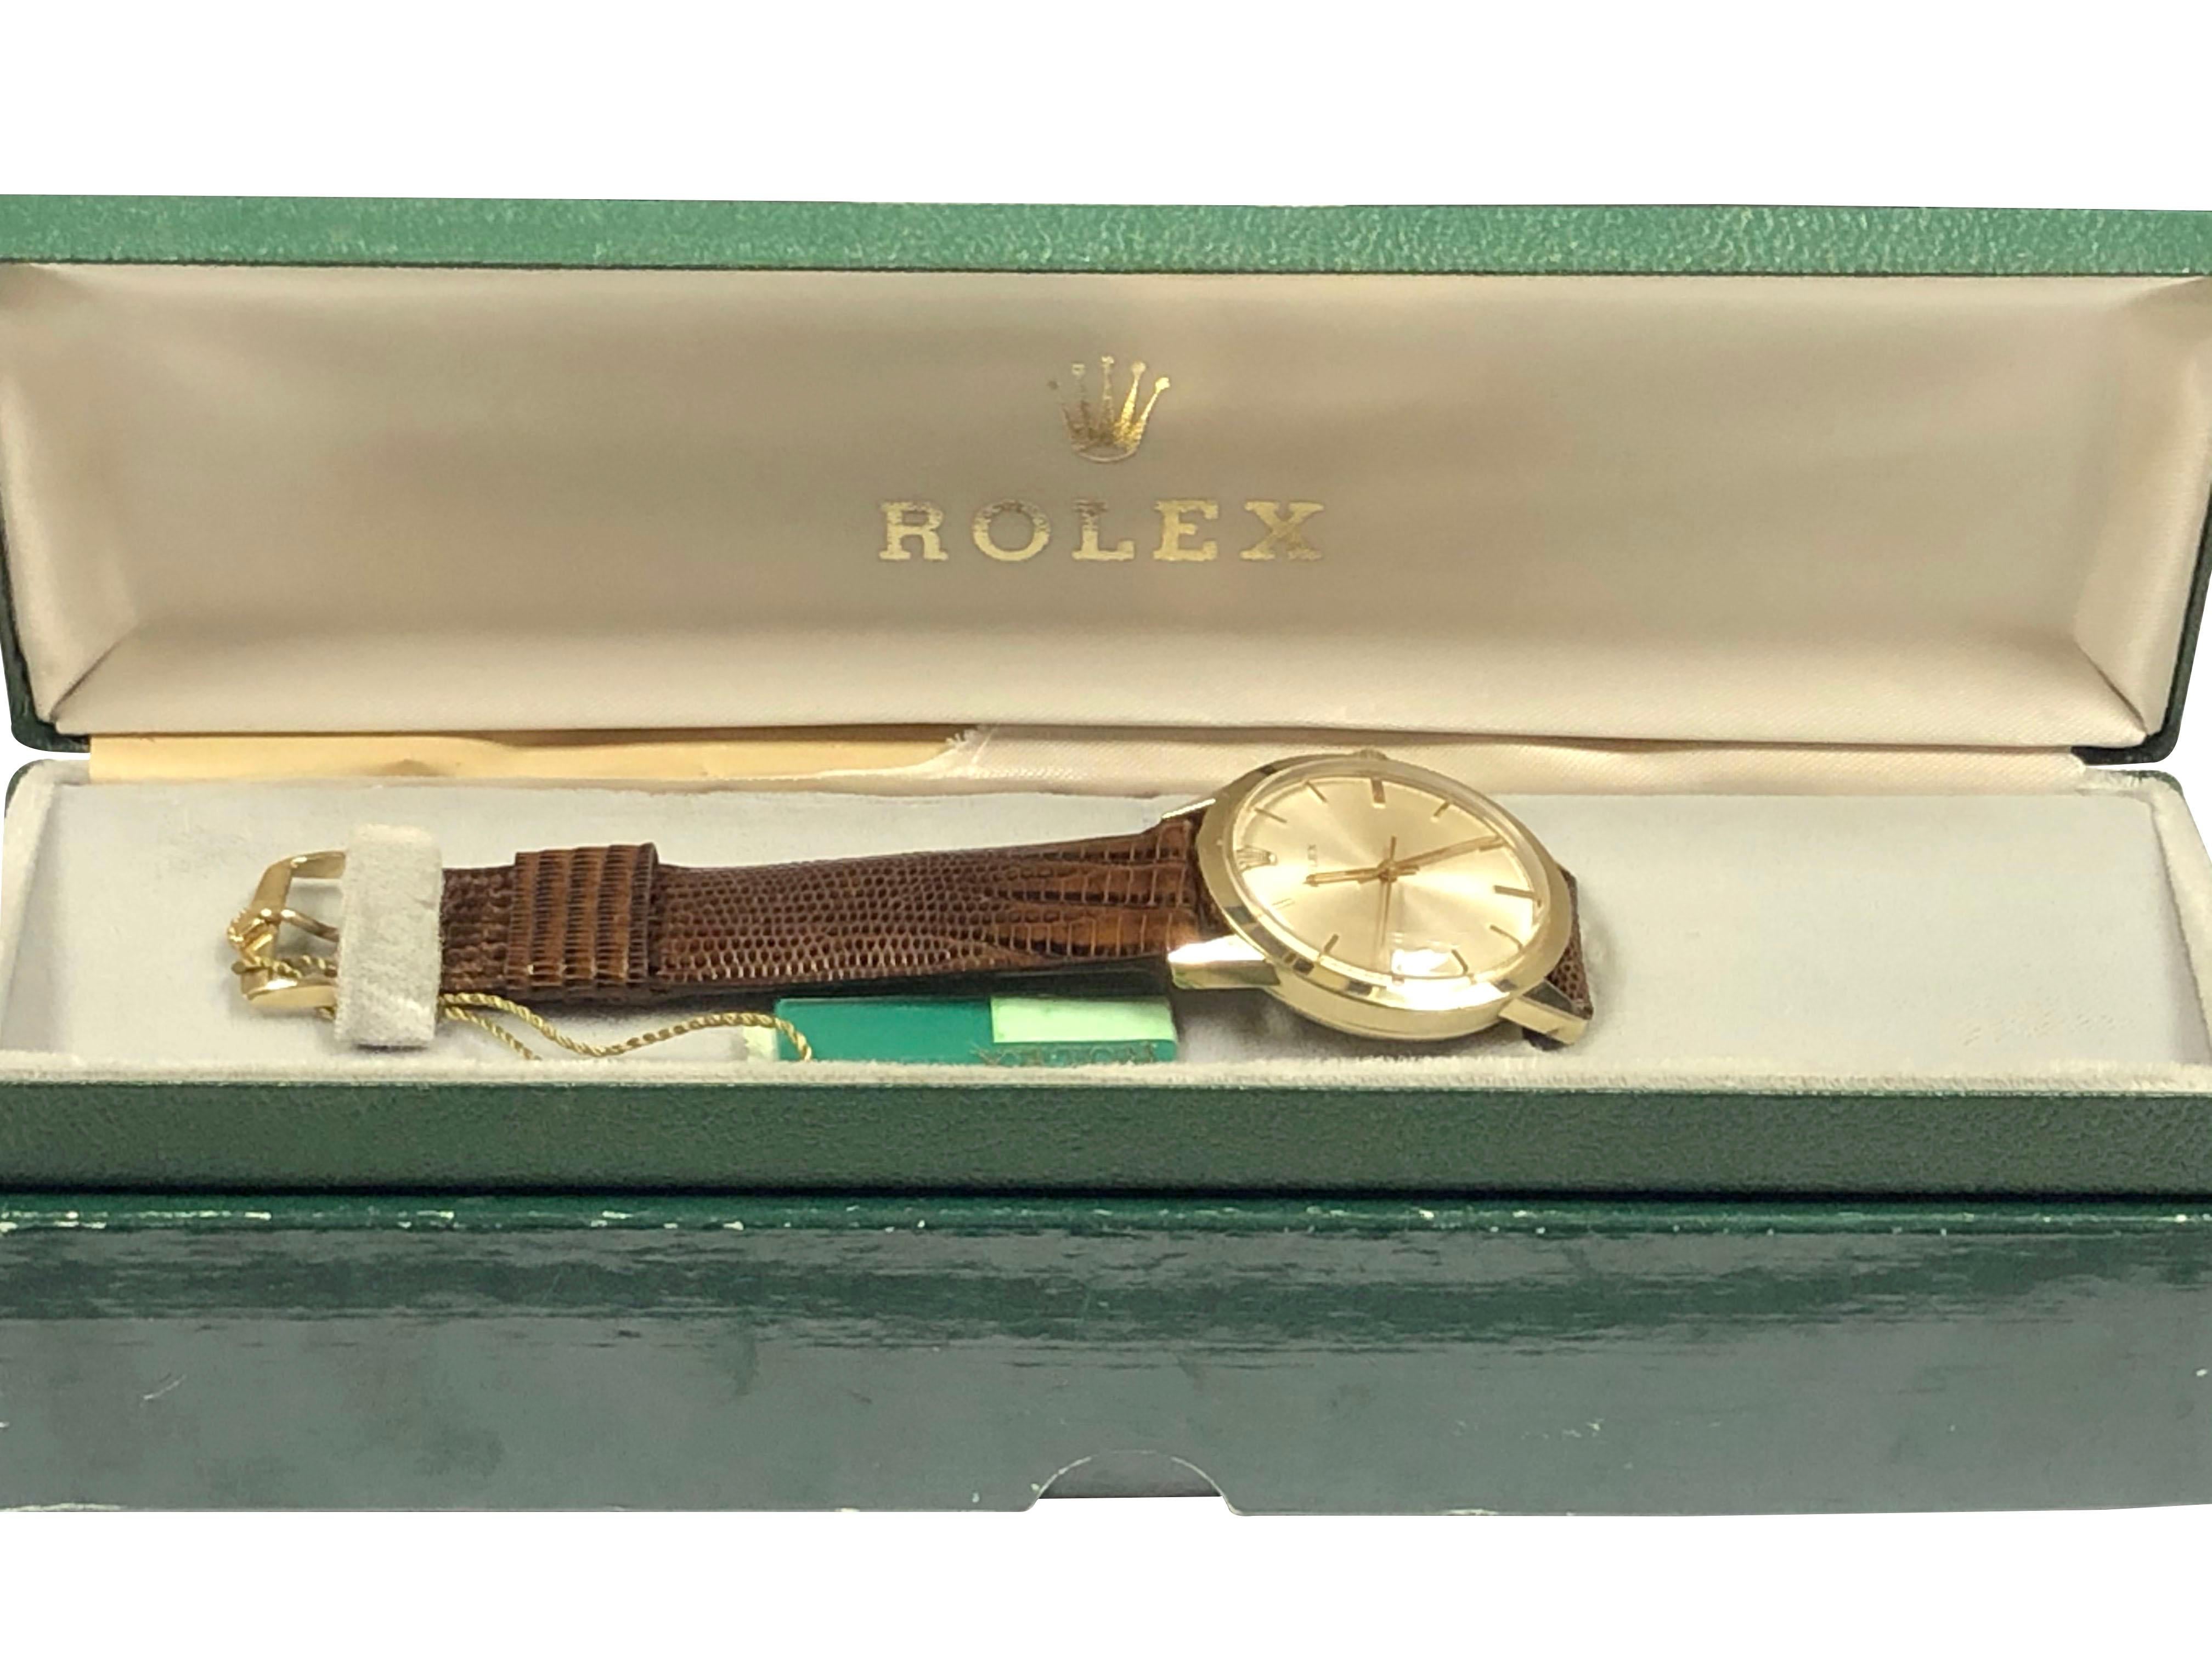 Rolex 1970 Near Mint Unworn Automatic Gold Filled cased Presentation Watch  1